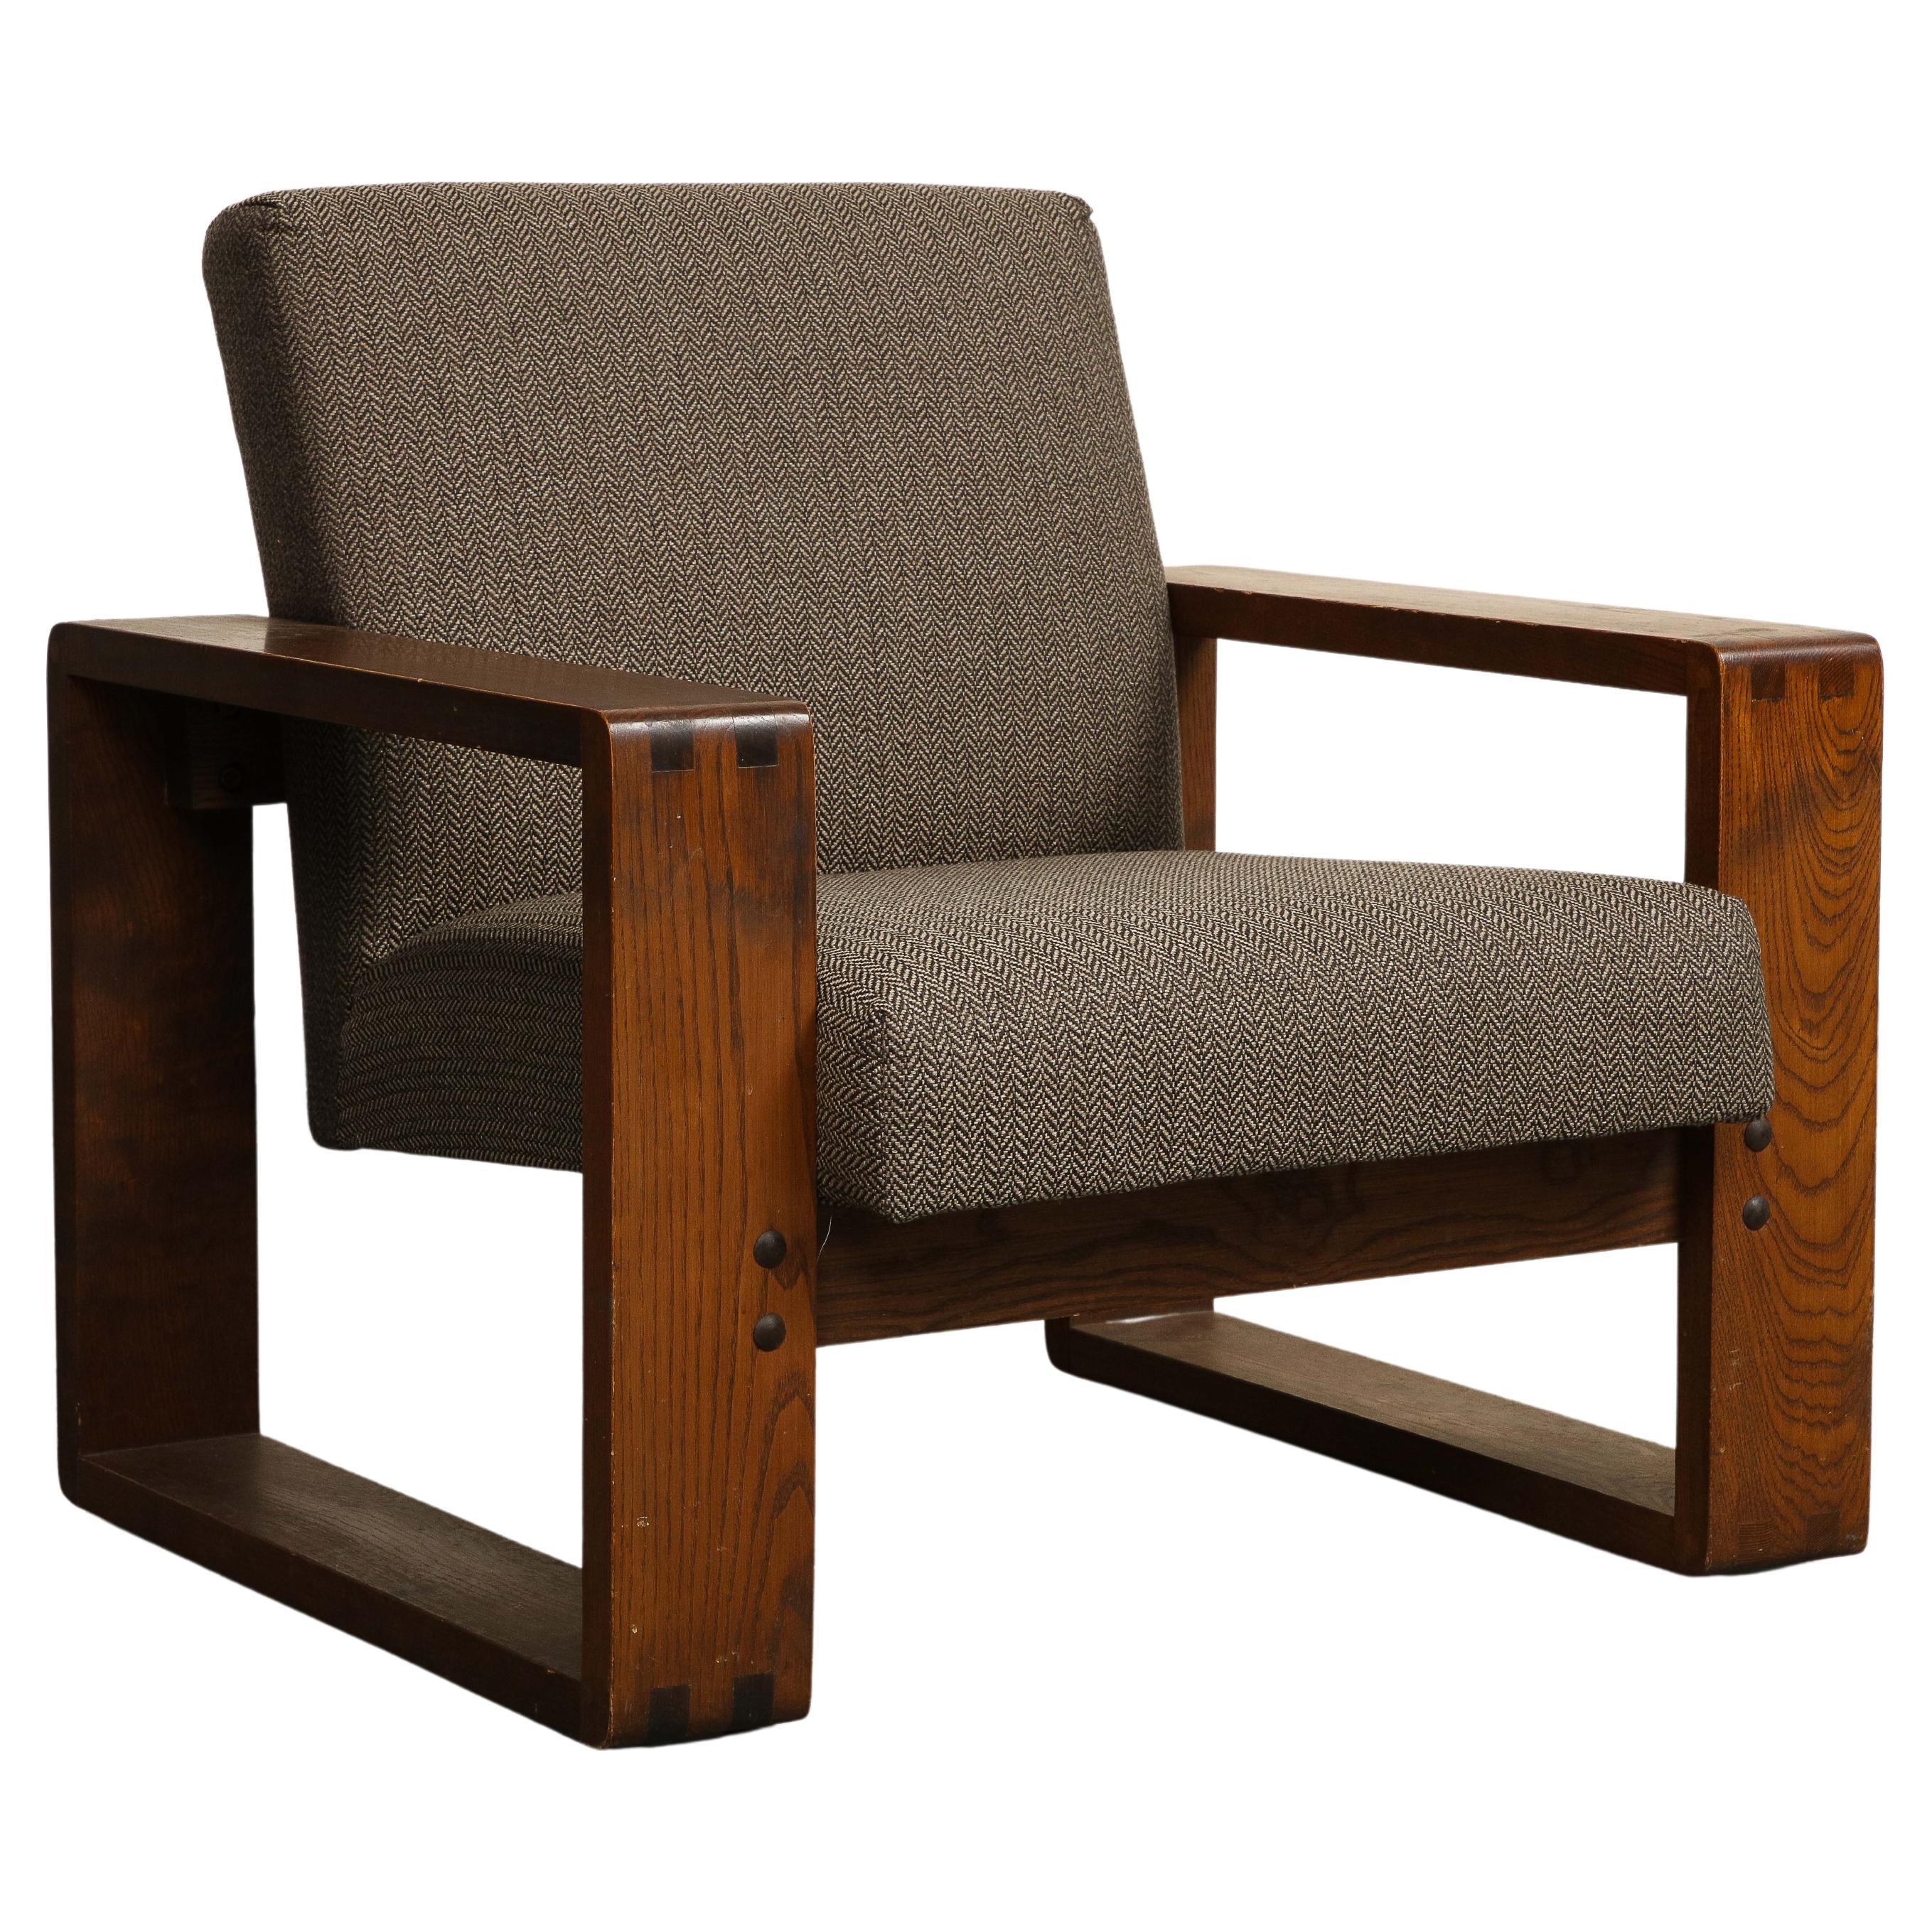 Oak Lounge Chair by Hans Krieks with Herringbone Upholstery, circa 1970s For Sale